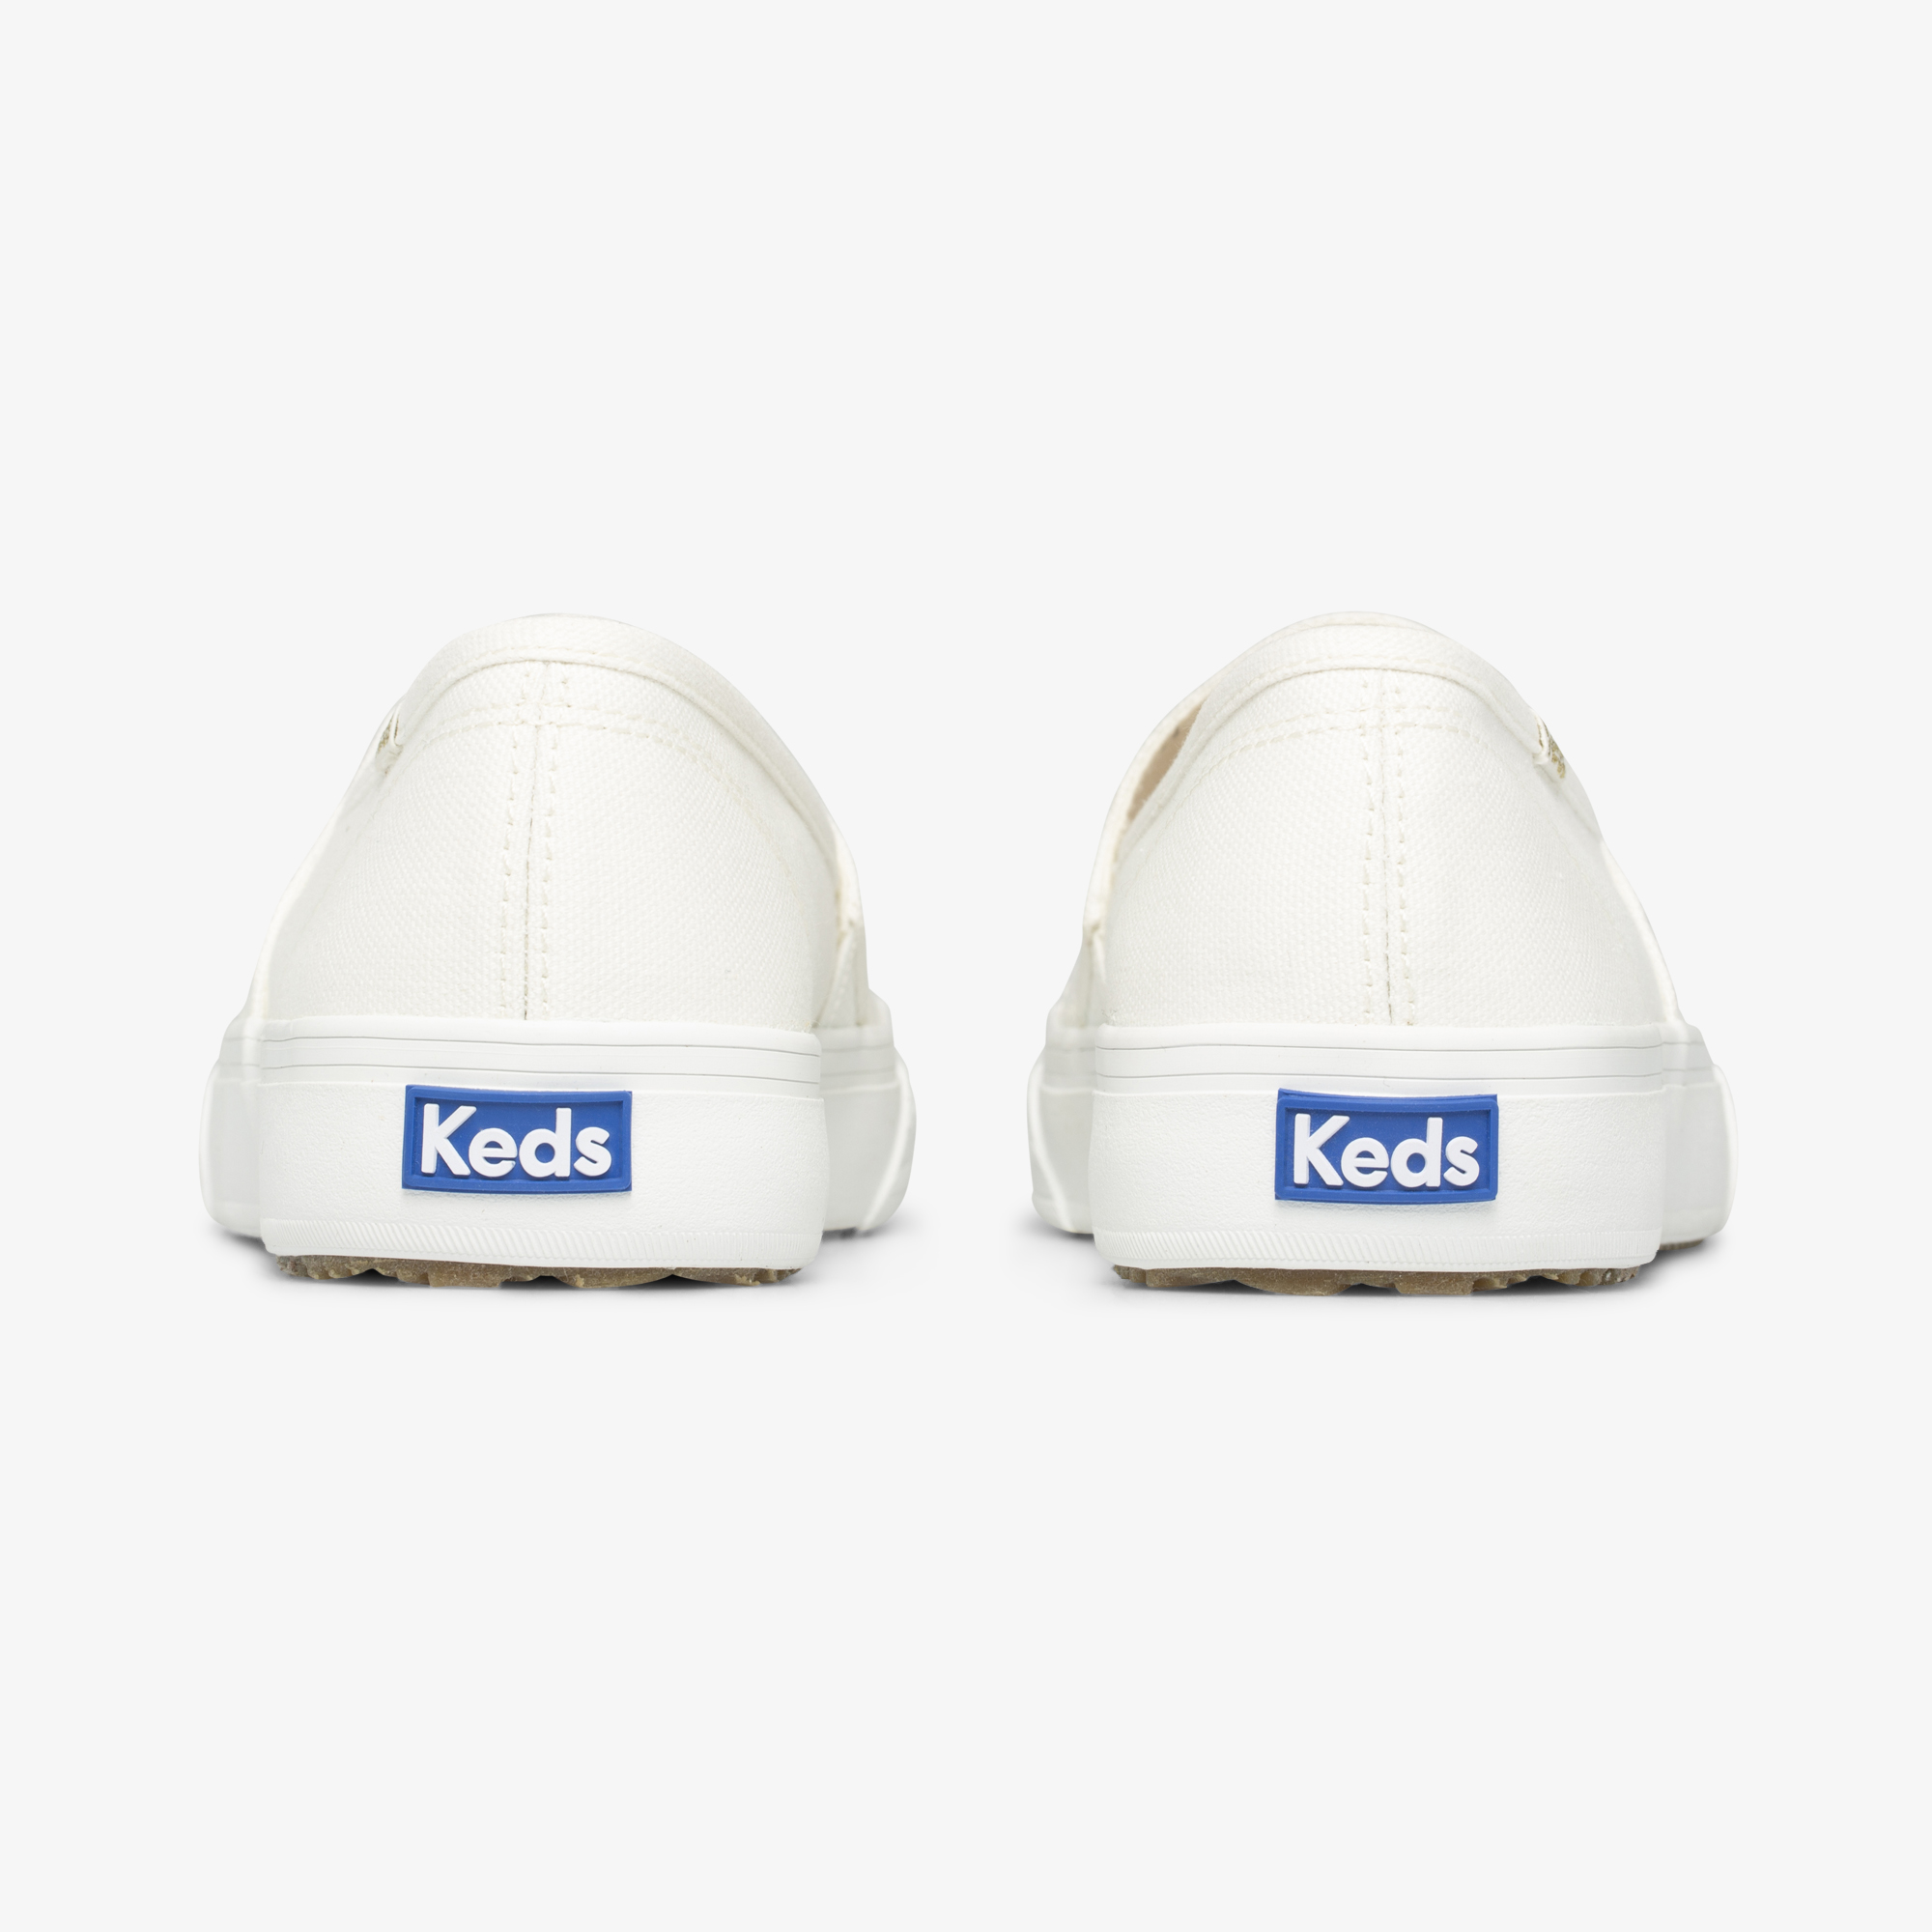 Giày Keds Nữ- Double Decker Wave Canvas Cream- KD065920